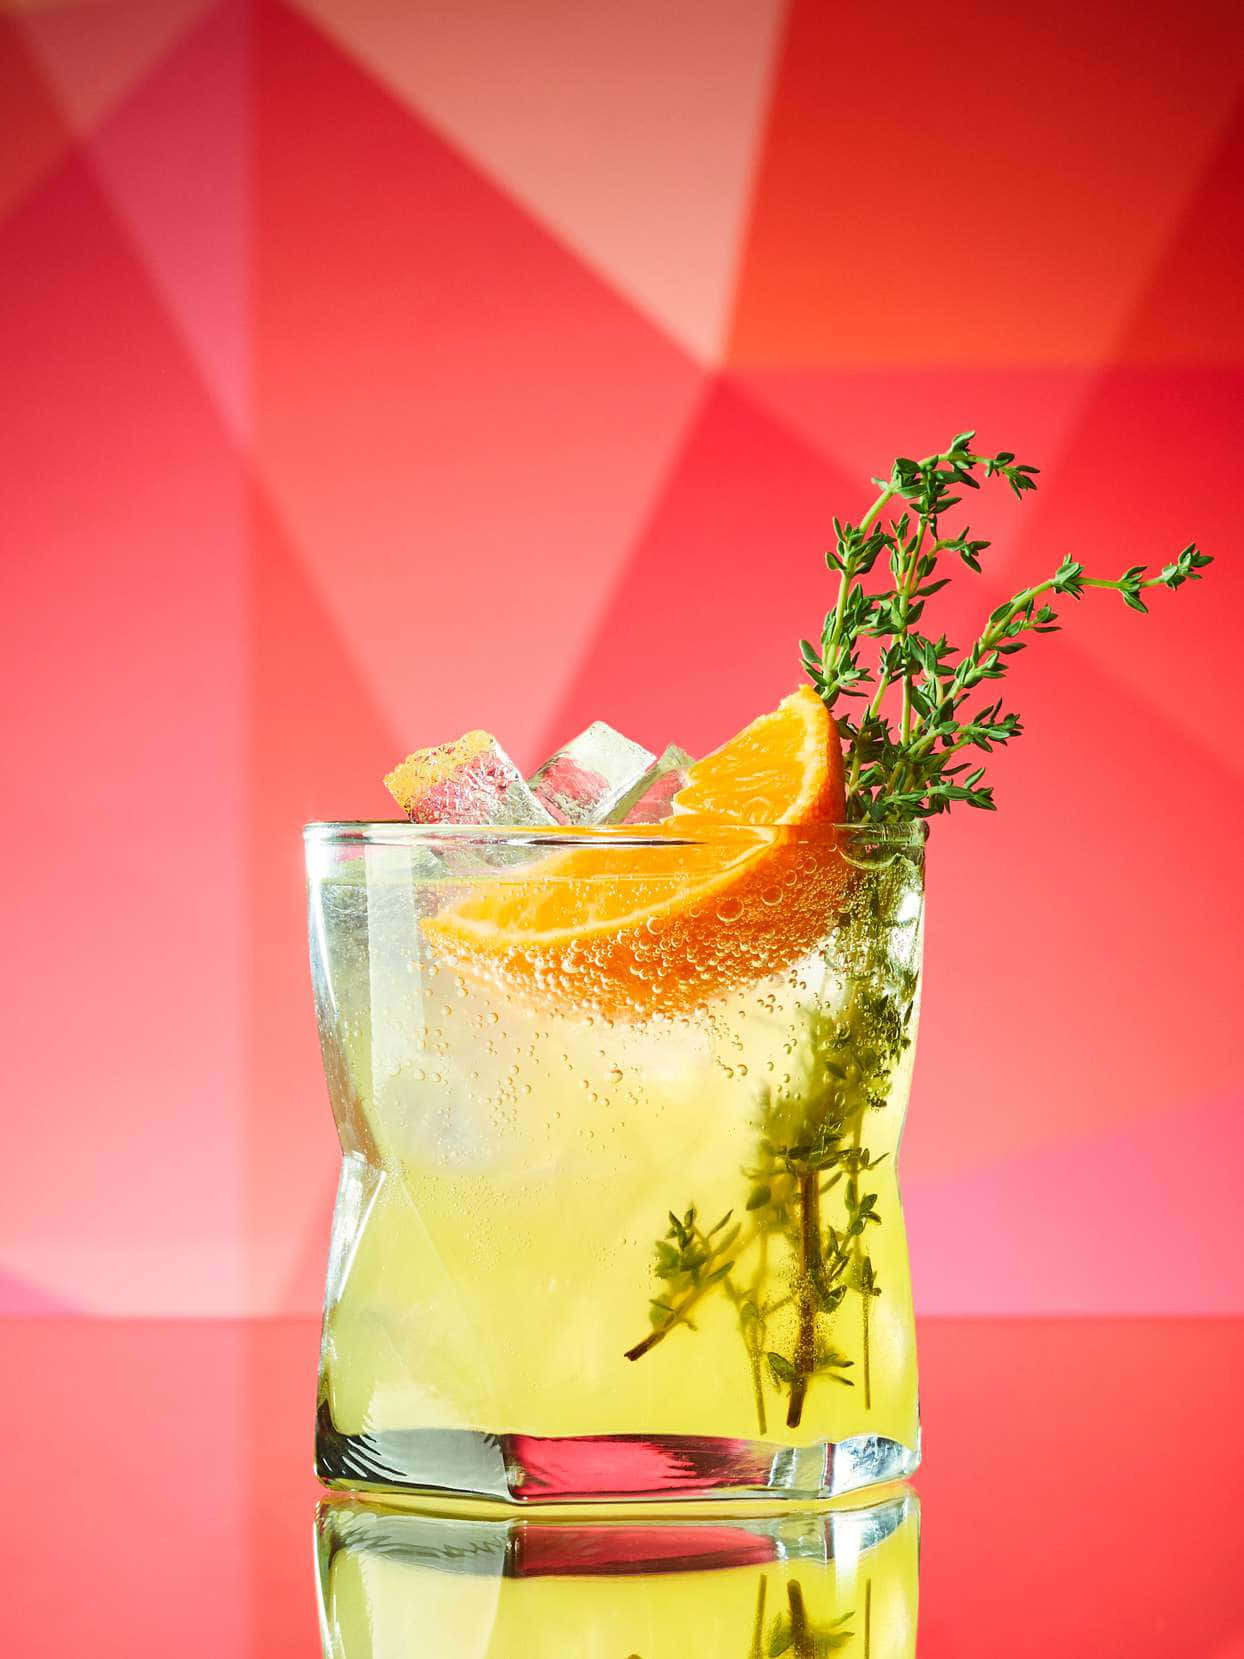 Orange Cocktail Drinks On Geometric Red Wallpaper